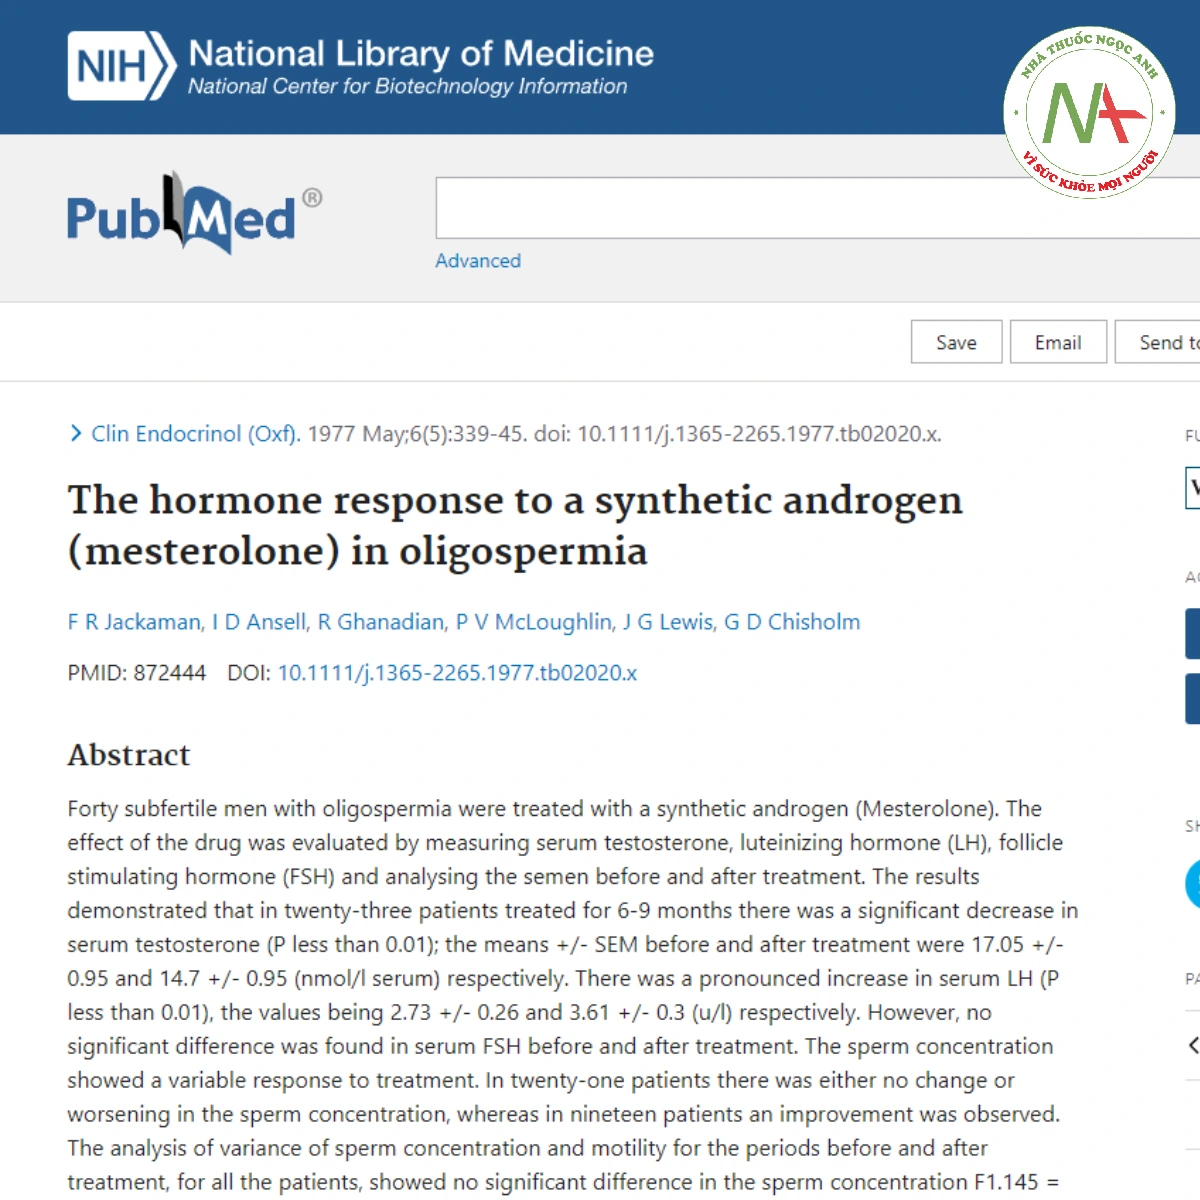 The hormone response to a synthetic androgen (mesterolone) in oligospermia